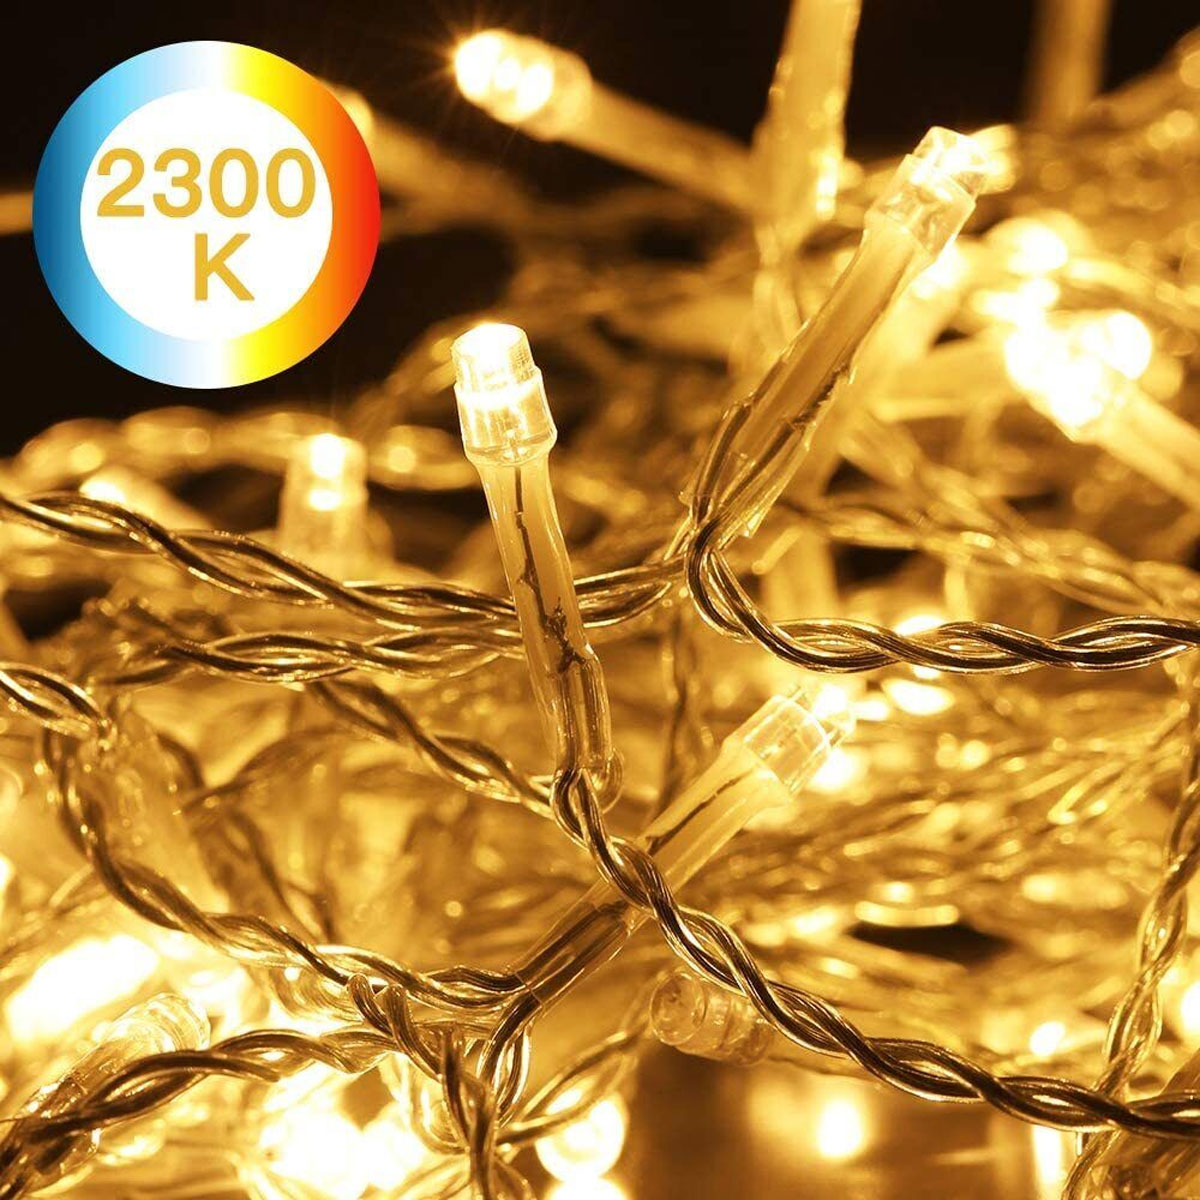 300 LED Warmweiß Warmweiß Lichterkette, PROSCENIC LED Warmweiß,